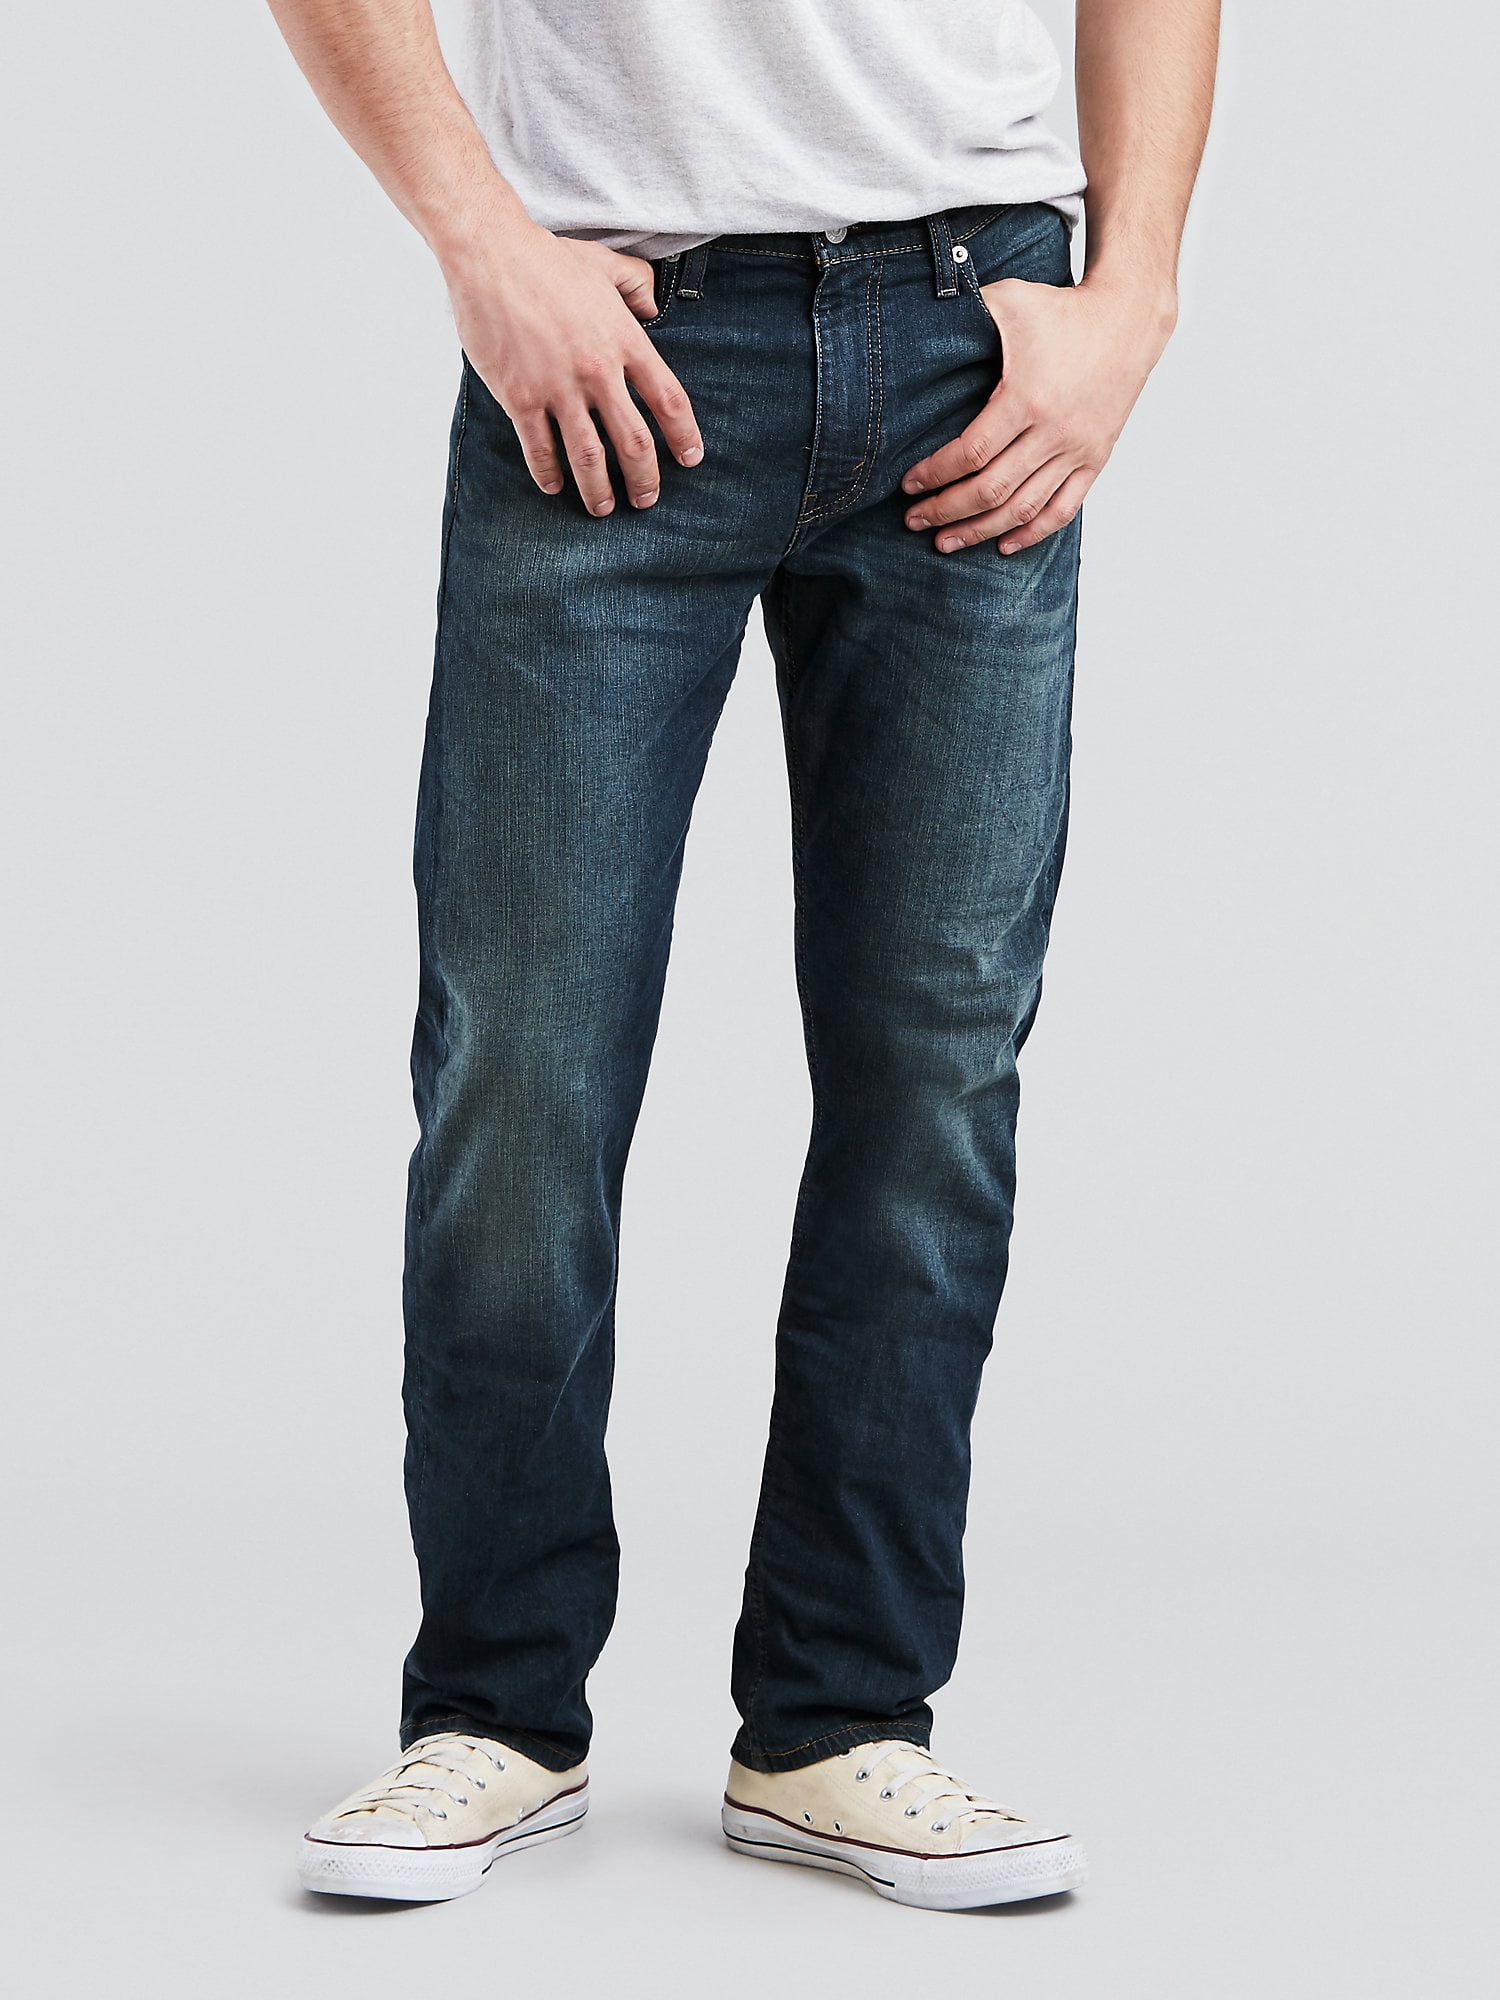 Levi's Men's 513 Slim Straight Fit Jeans - Walmart.com